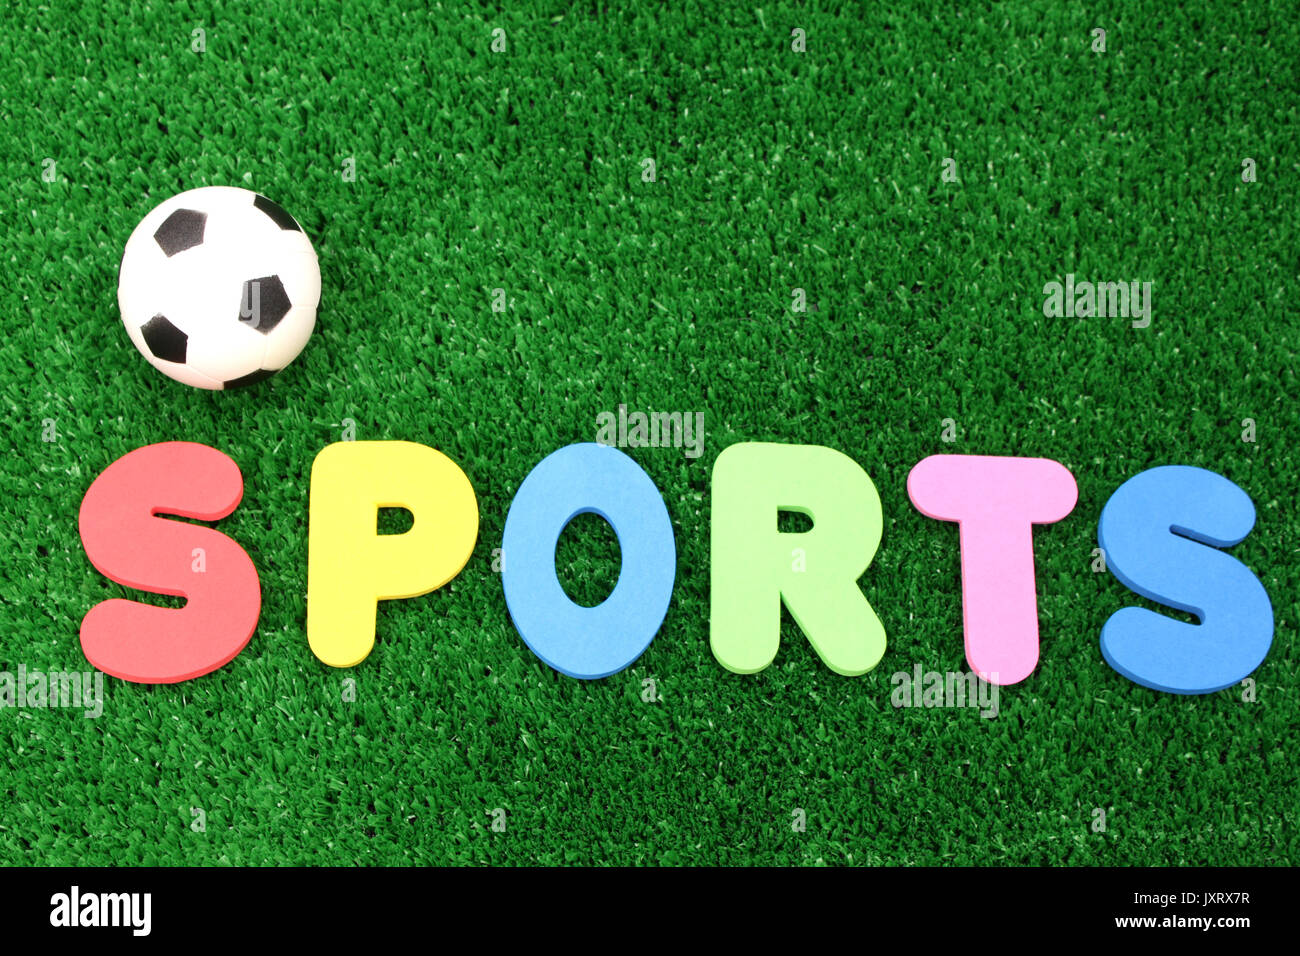 Sports ballon atificial turf - word plastic colours Stock Photo